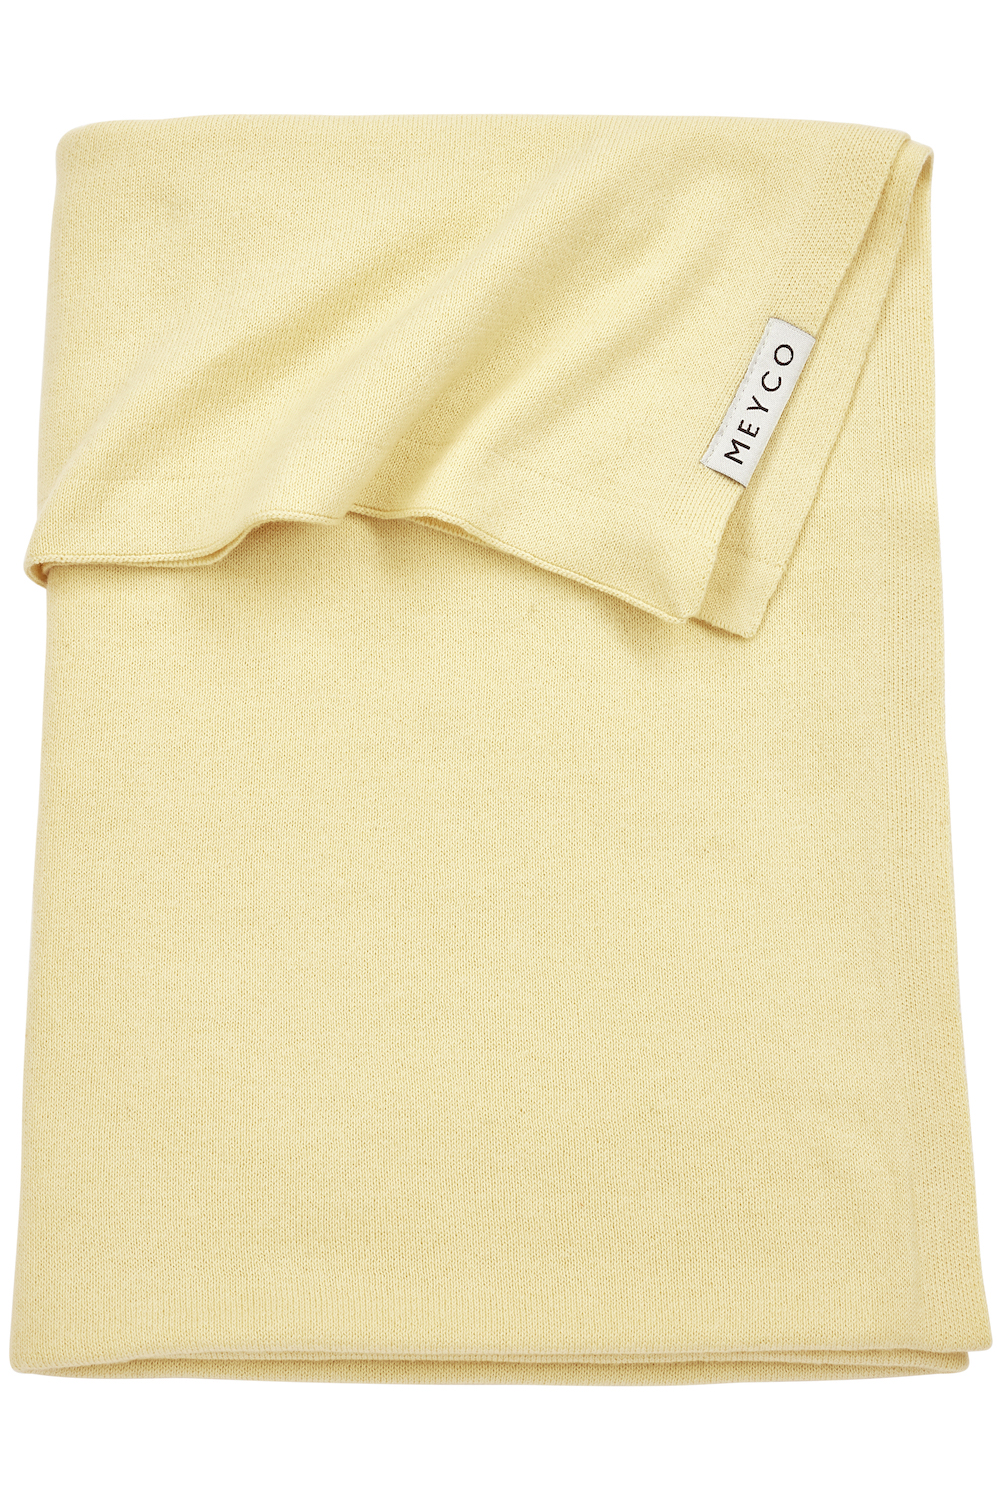 Babydecke Knit Basic - soft yellow - 75x100cm